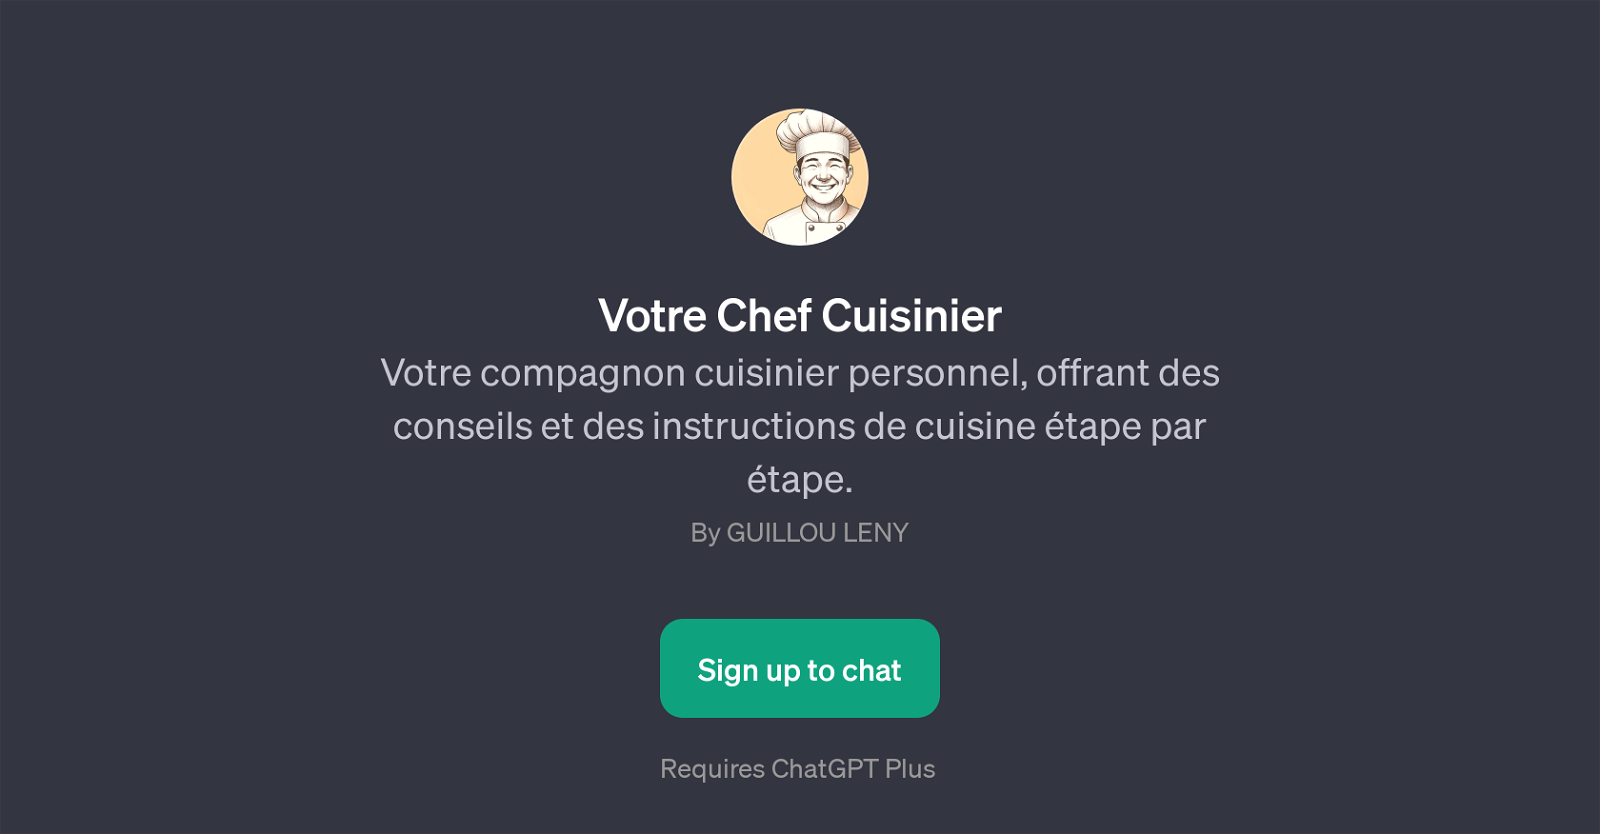 Votre Chef Cuisinier website